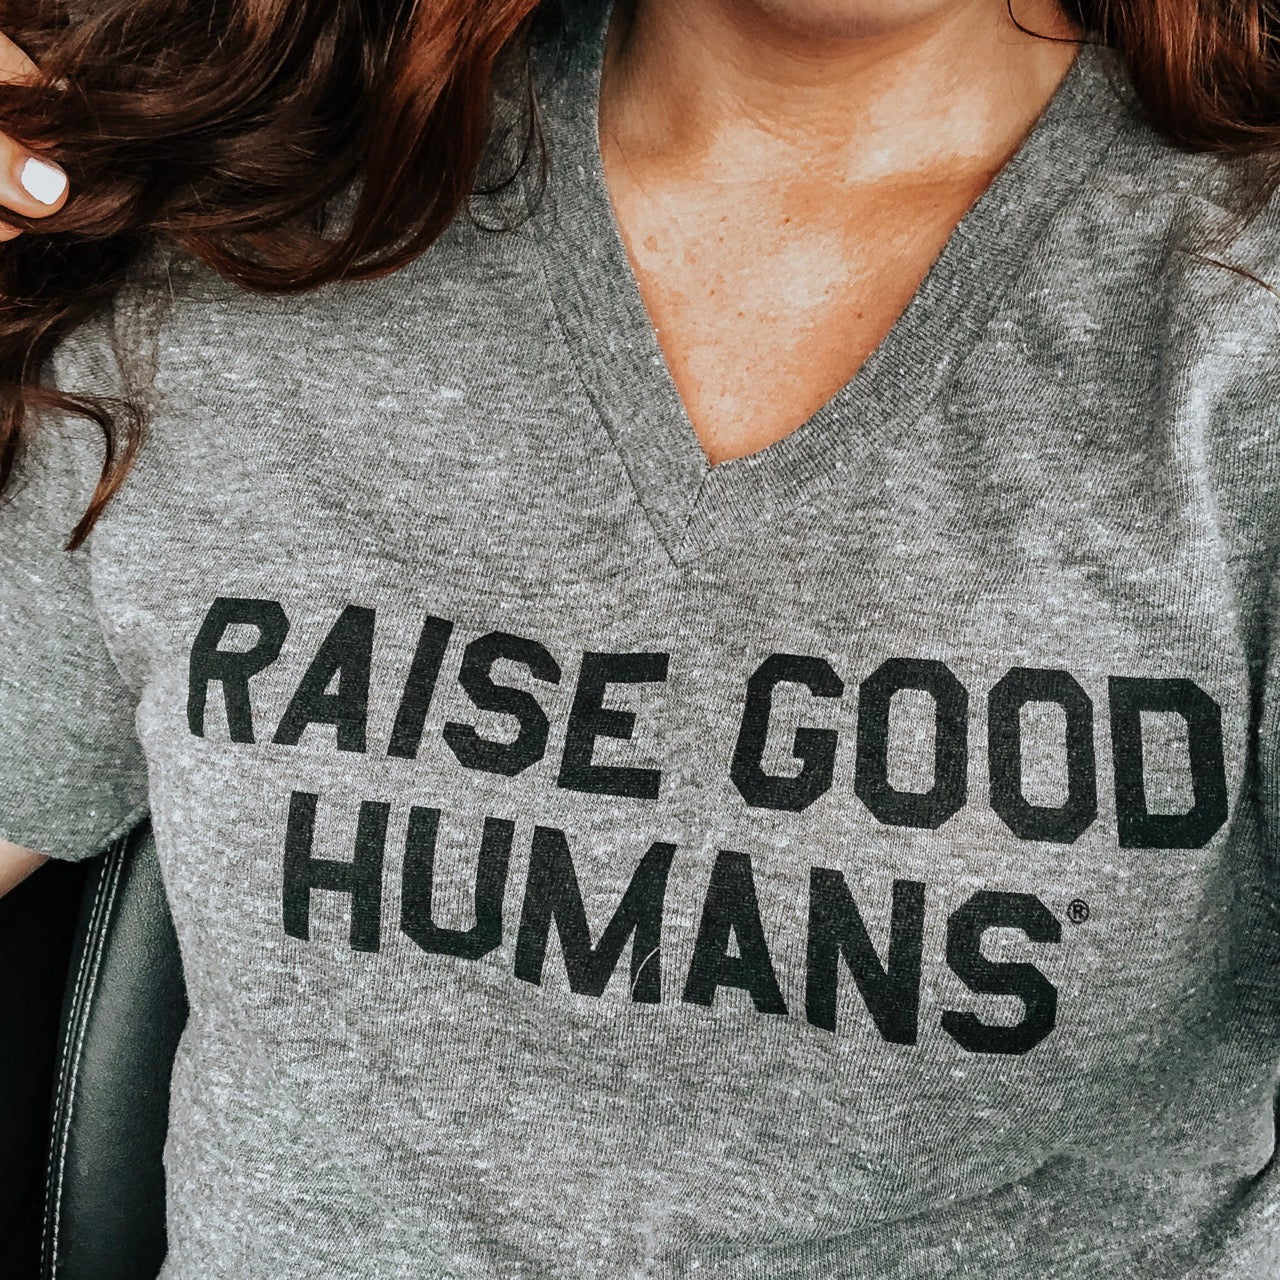 Raising GOOD Humans